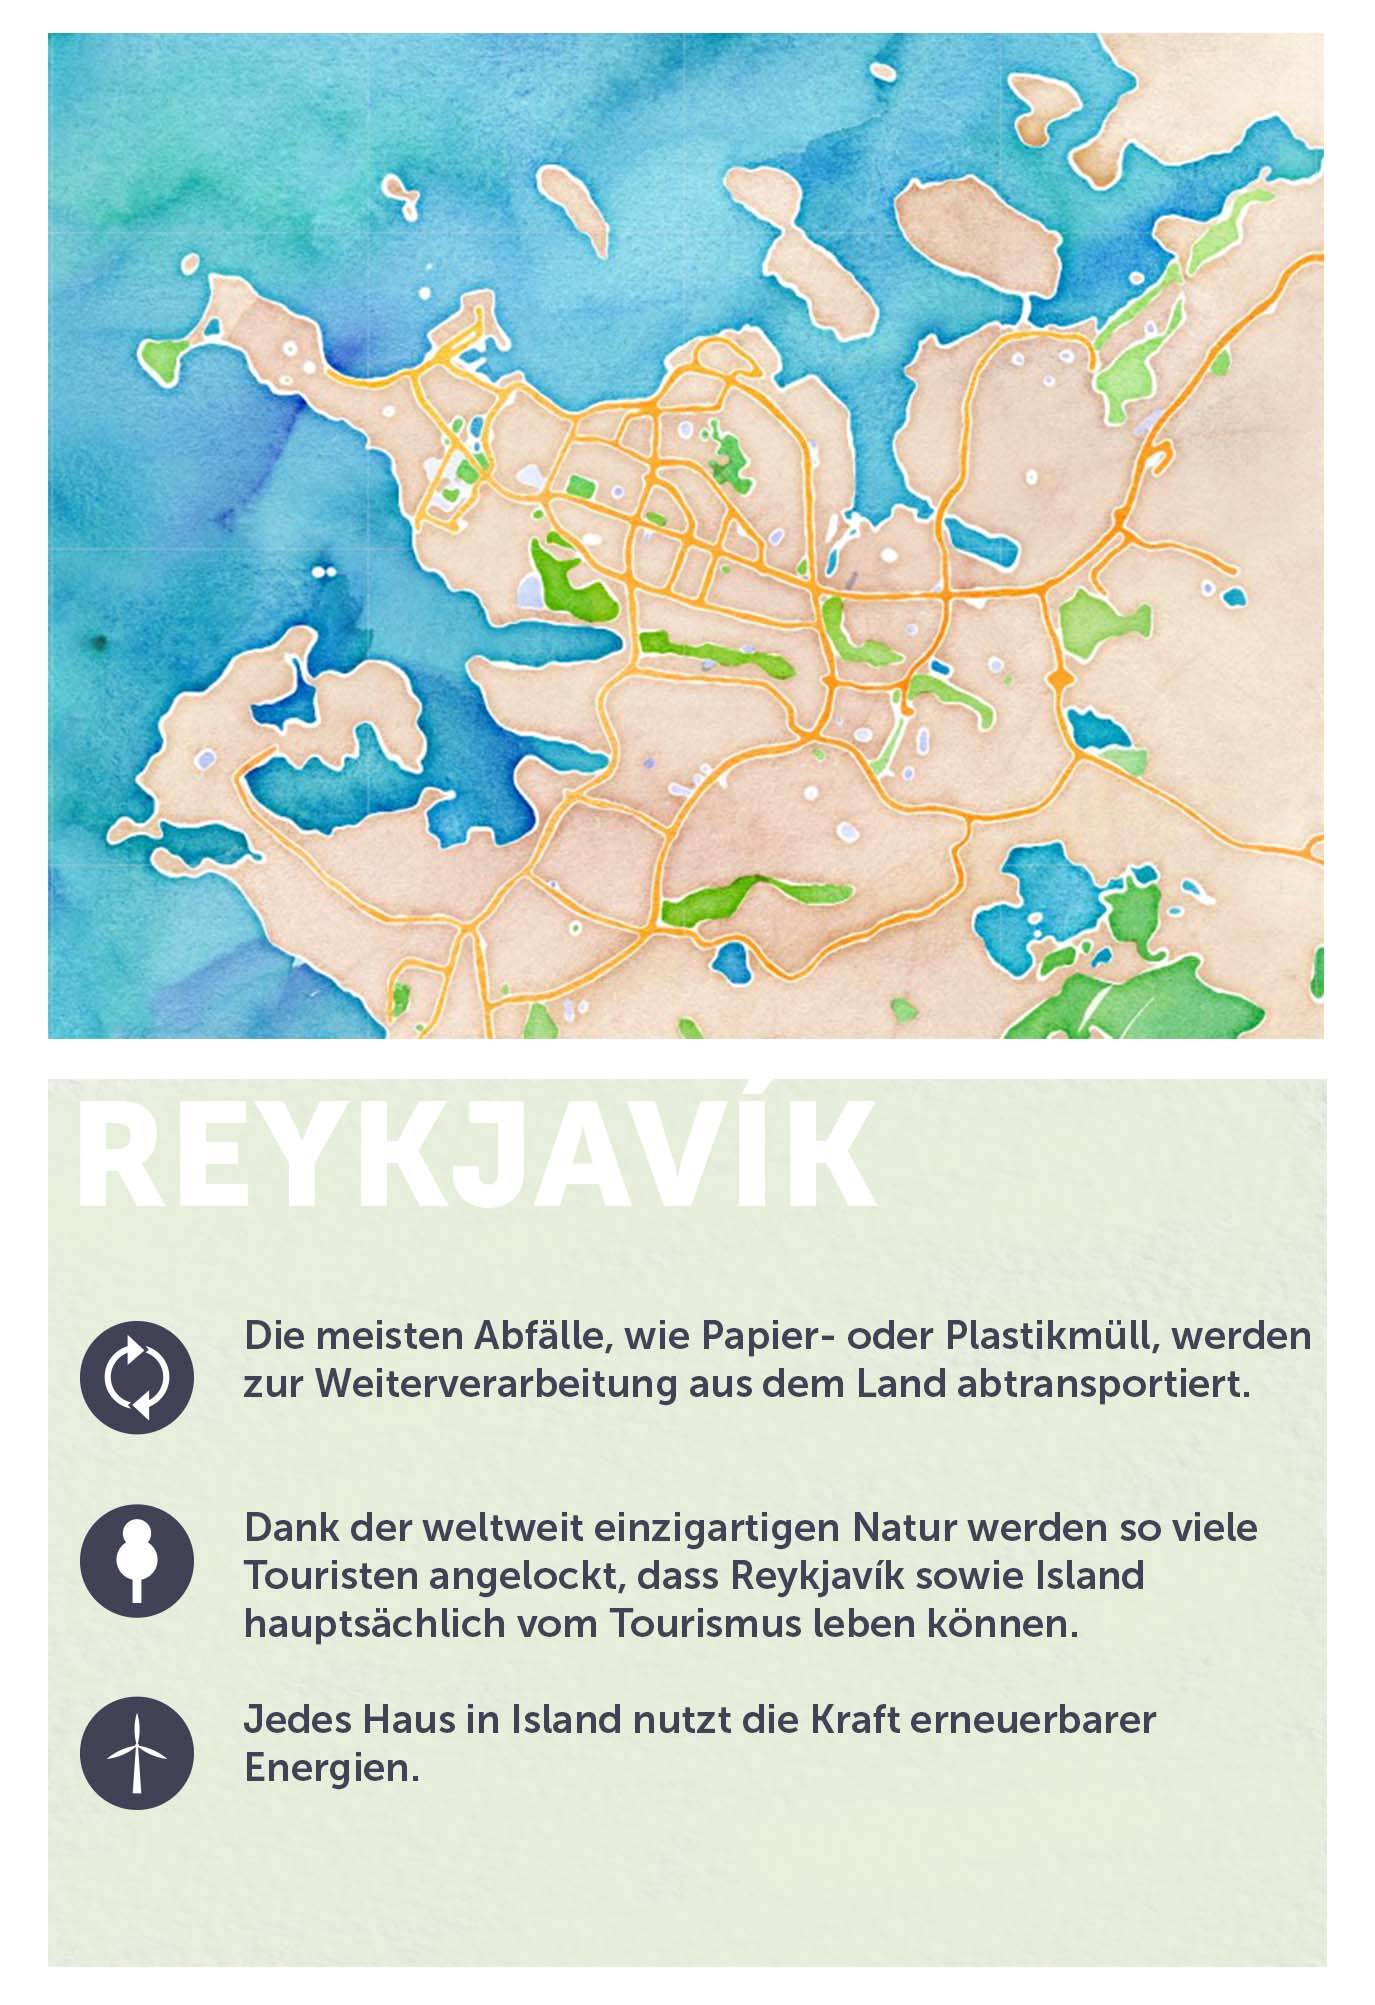 Reykjavik grüne Stadt in Europa